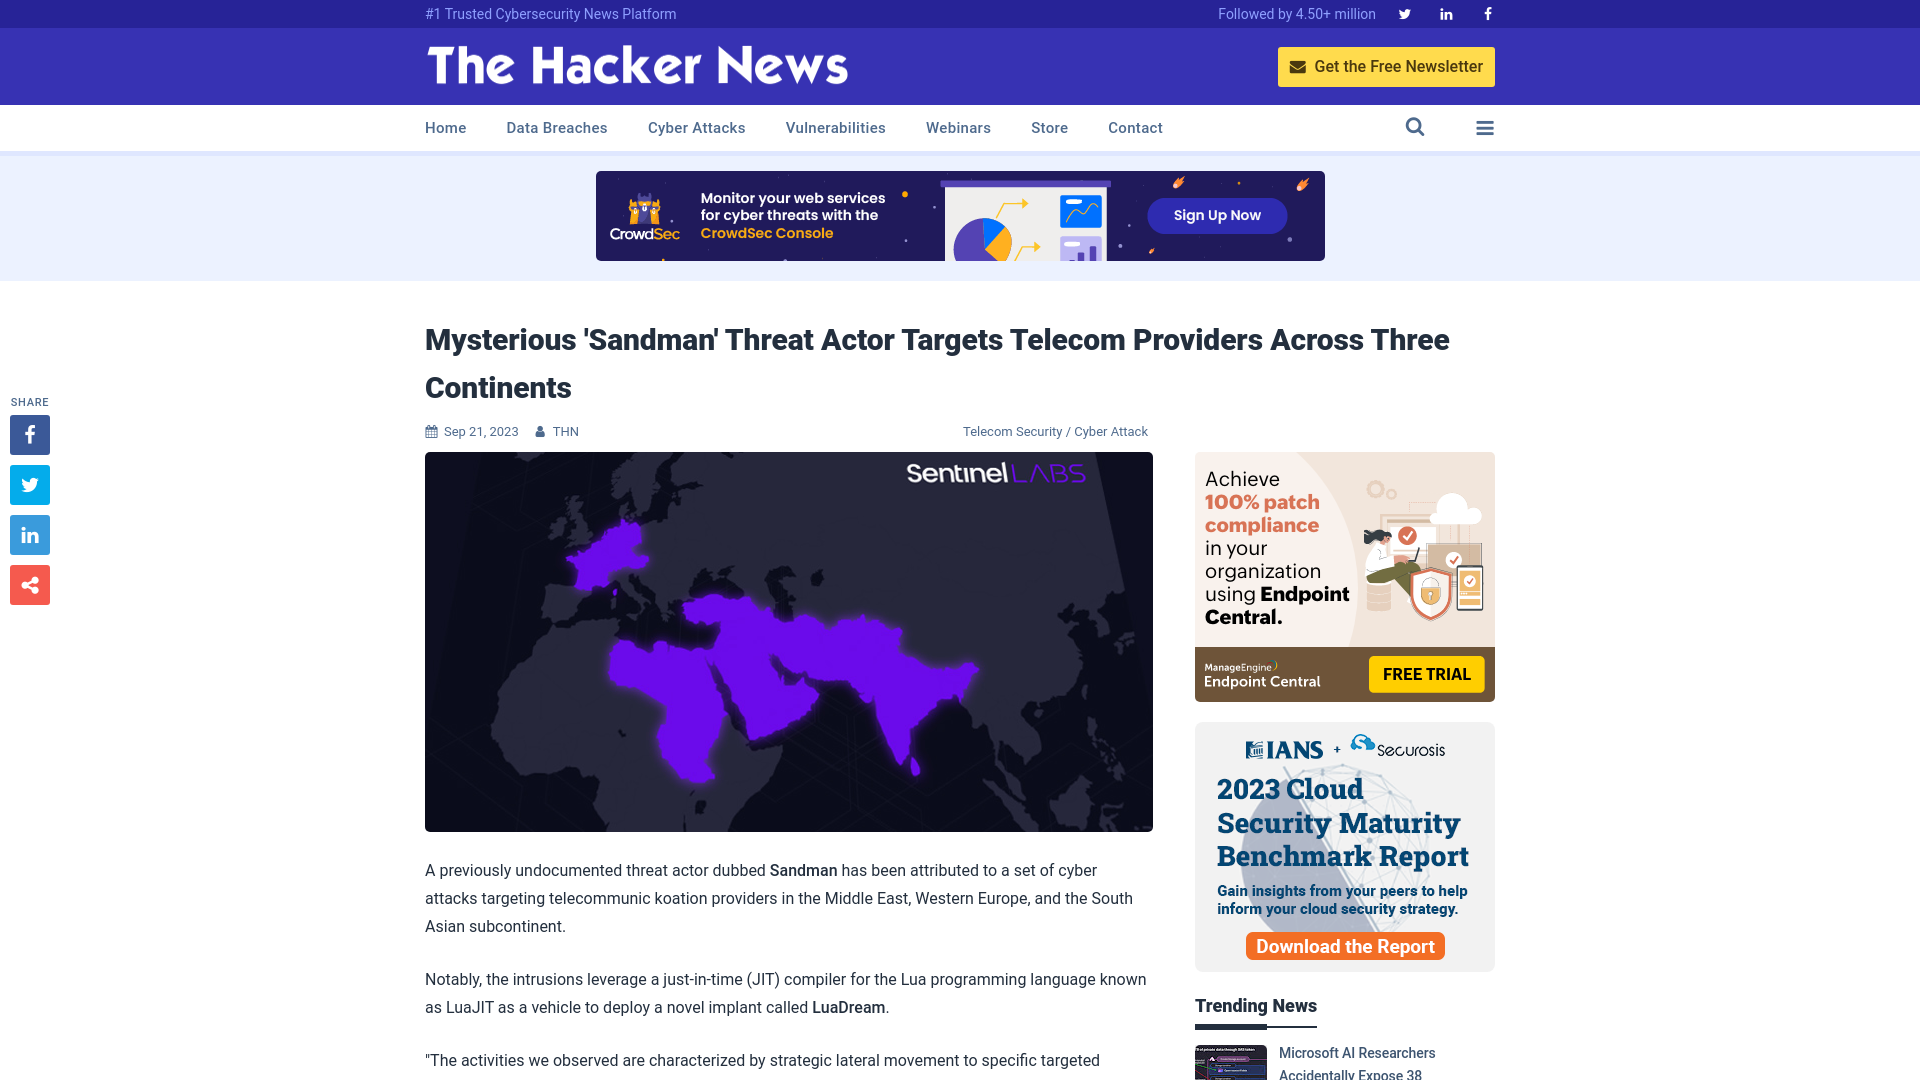 Mysterious 'Sandman' Threat Actor Targets Telecom Providers Across Three Continents